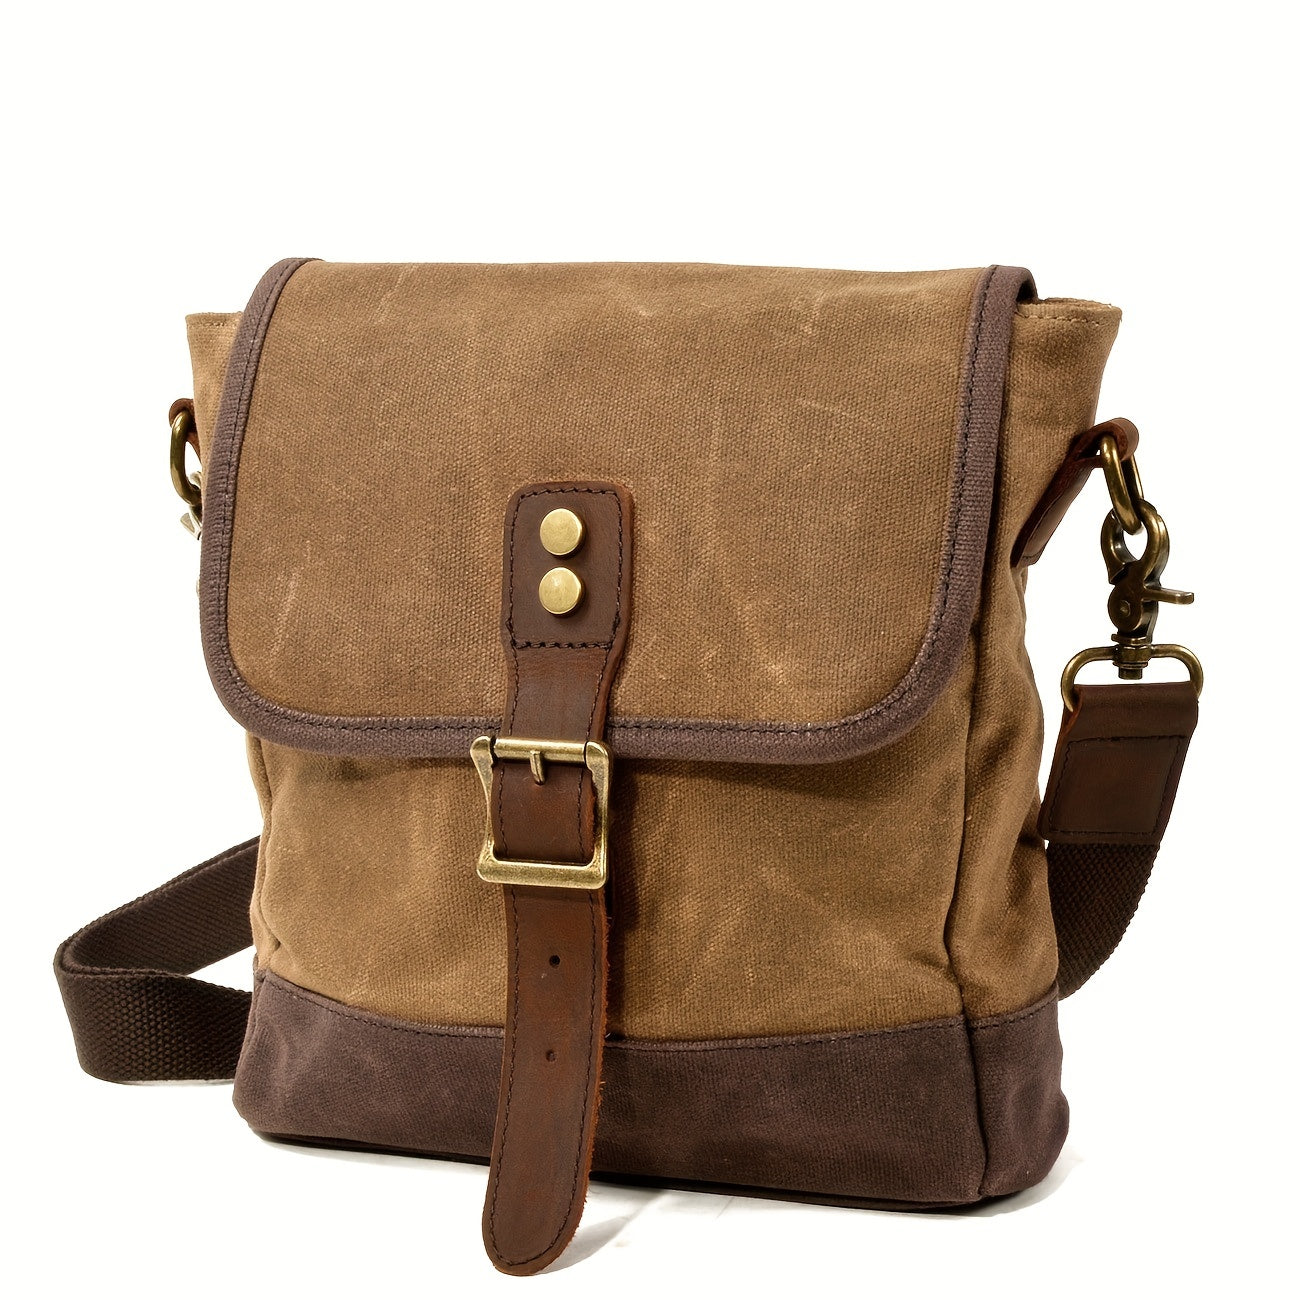 Men's New Fashion Waxed Canvas Shoulder Bag - Casual Outdoor Travel Bag